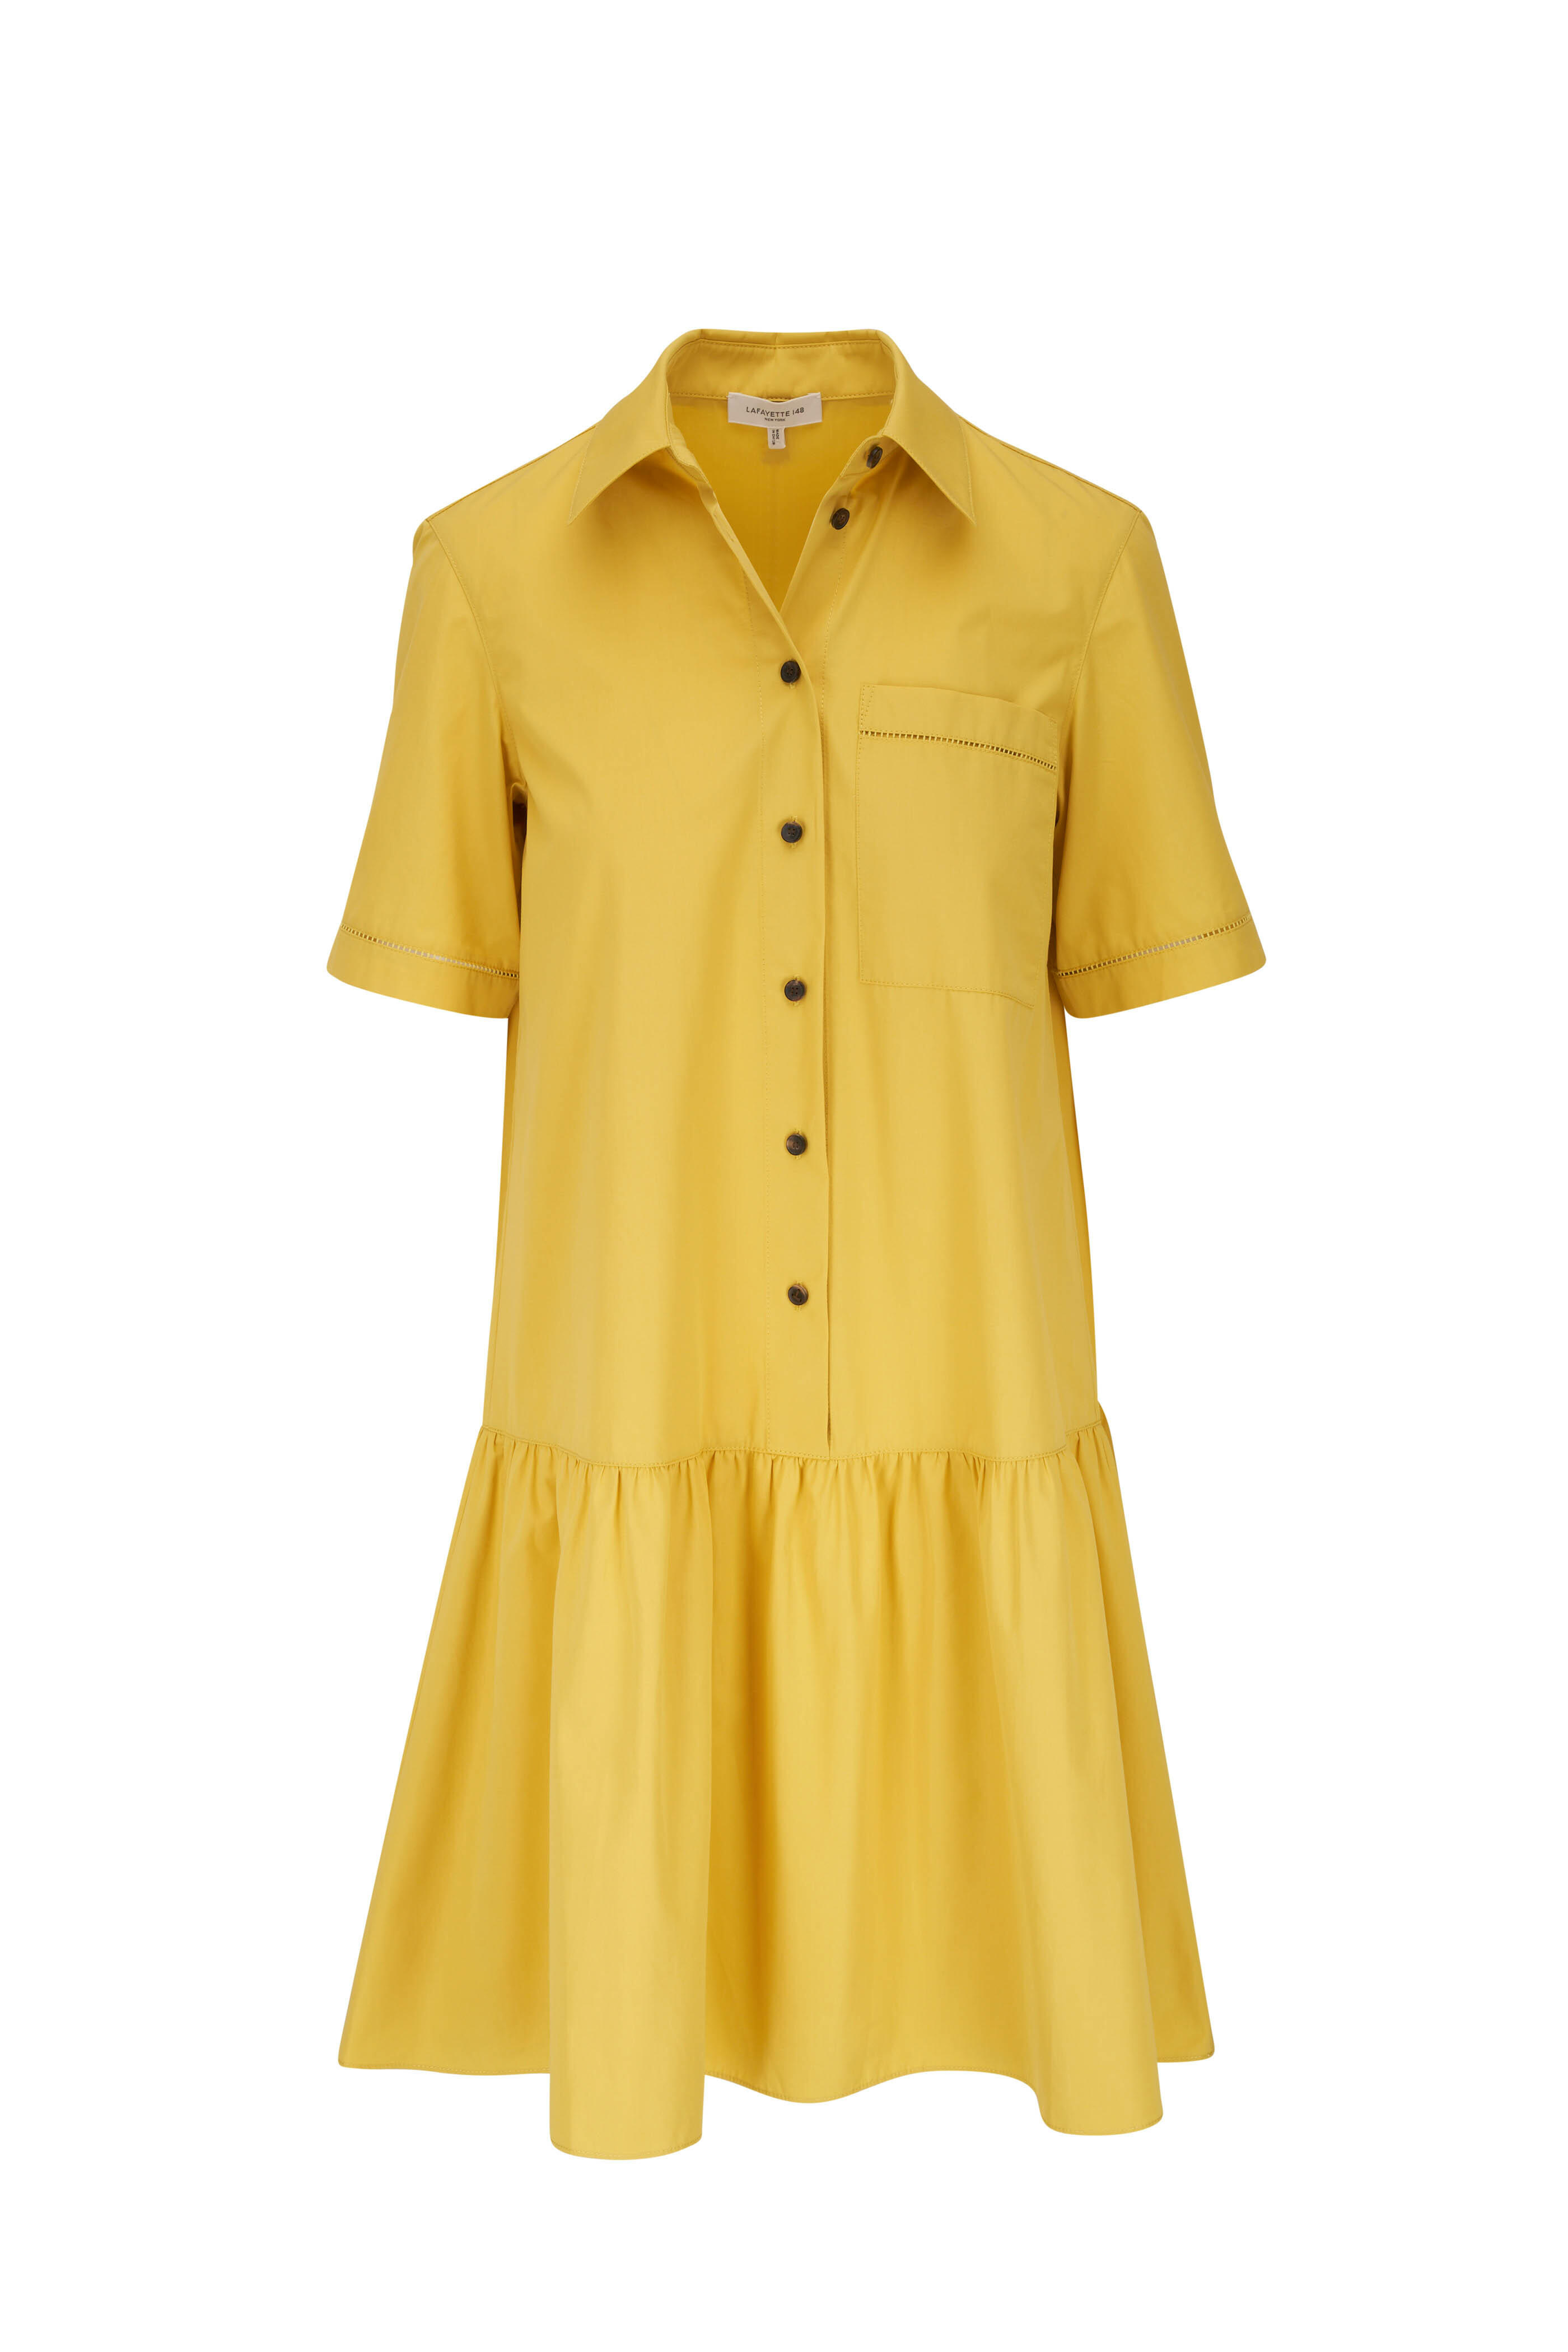 Lafayette 148 New York - Troy Bright Citrine Short Sleeve Peplum Dress